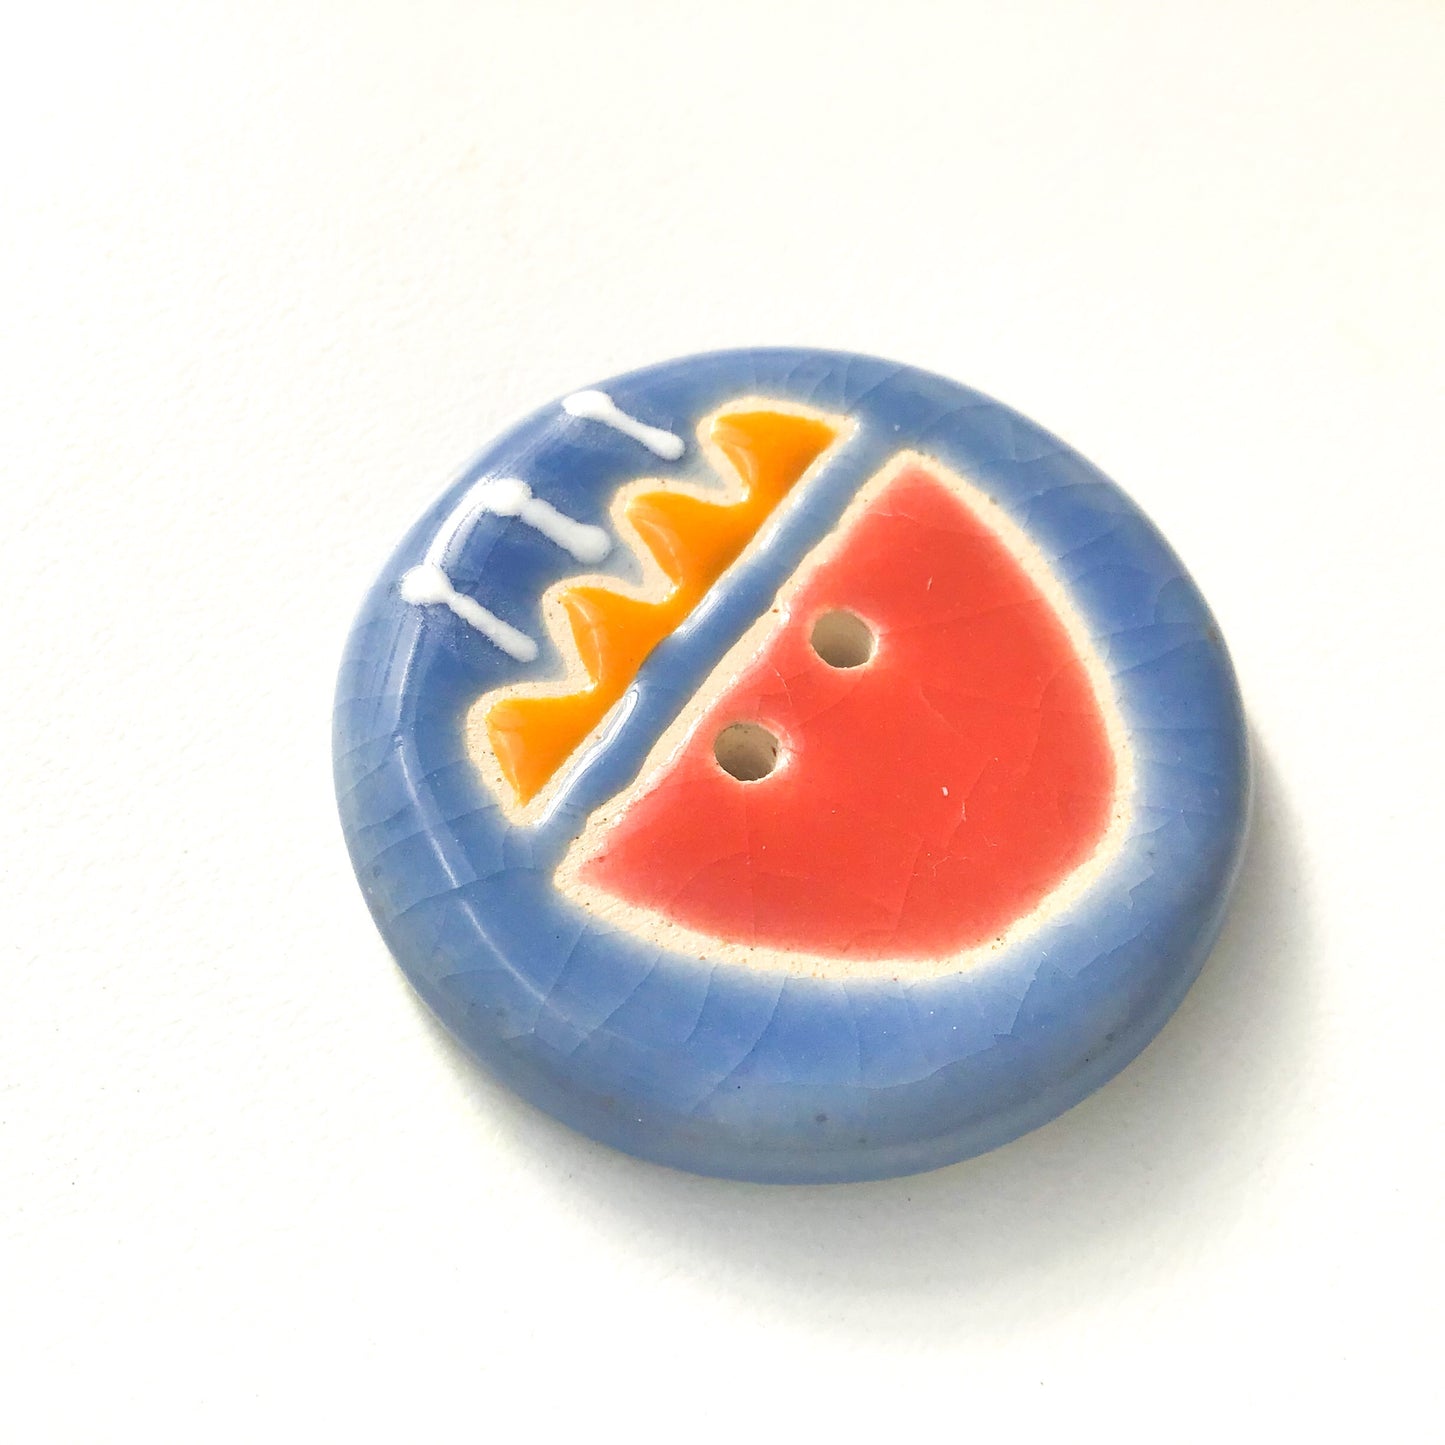 Quilted Flower Button - Salmon & Orange on Blue Background - 1 1/2"